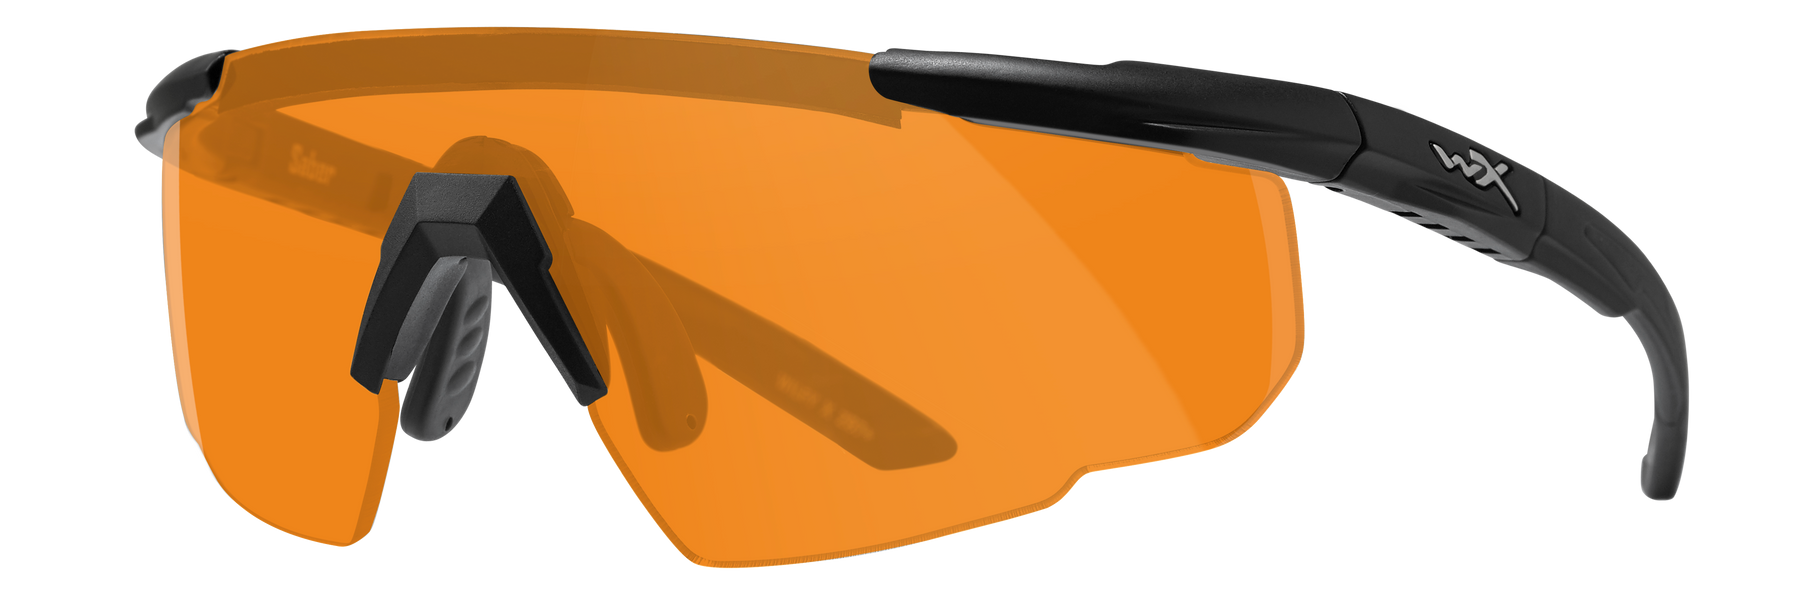 Wiley-X Saber Advanced - Ballistic Eyewear Tactical Sunglasses